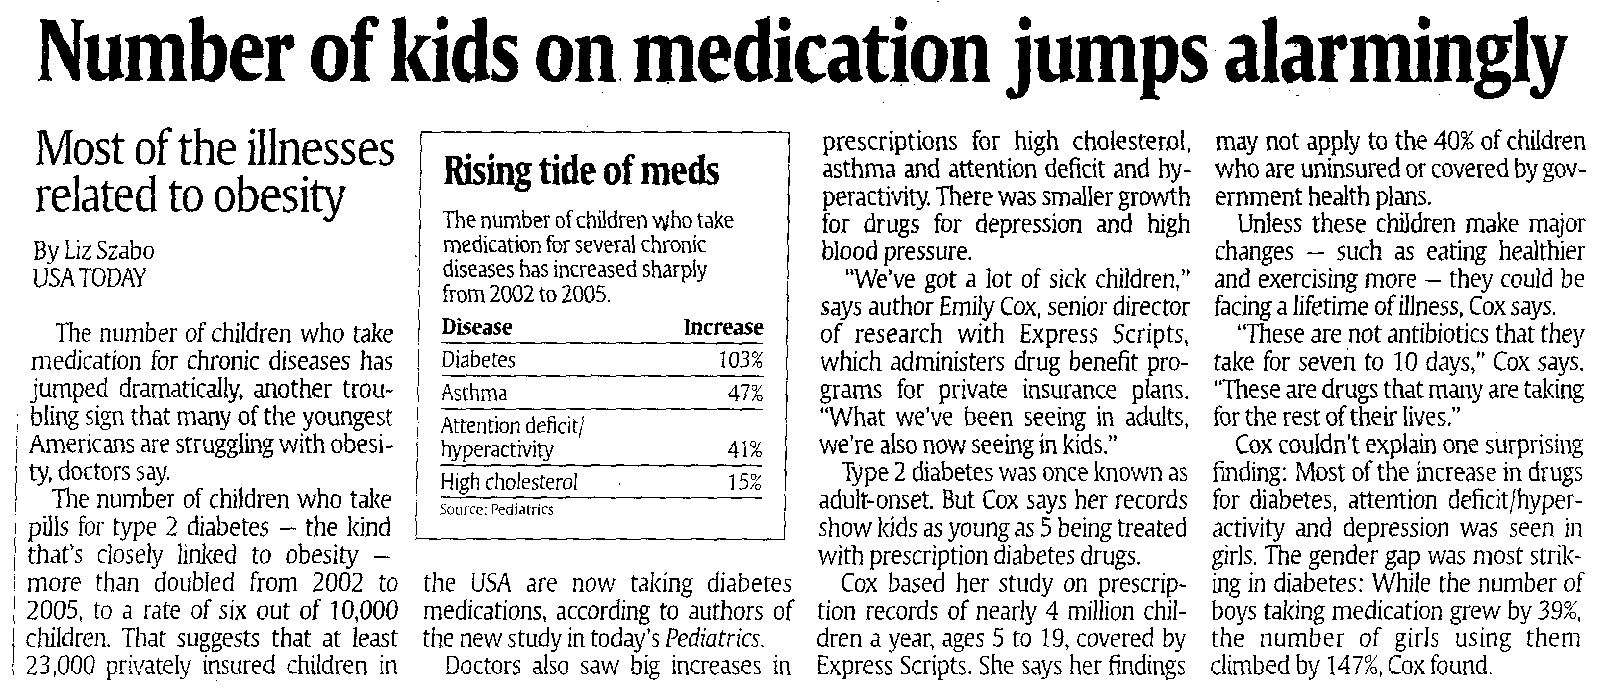 Number of Kids on Medication Article